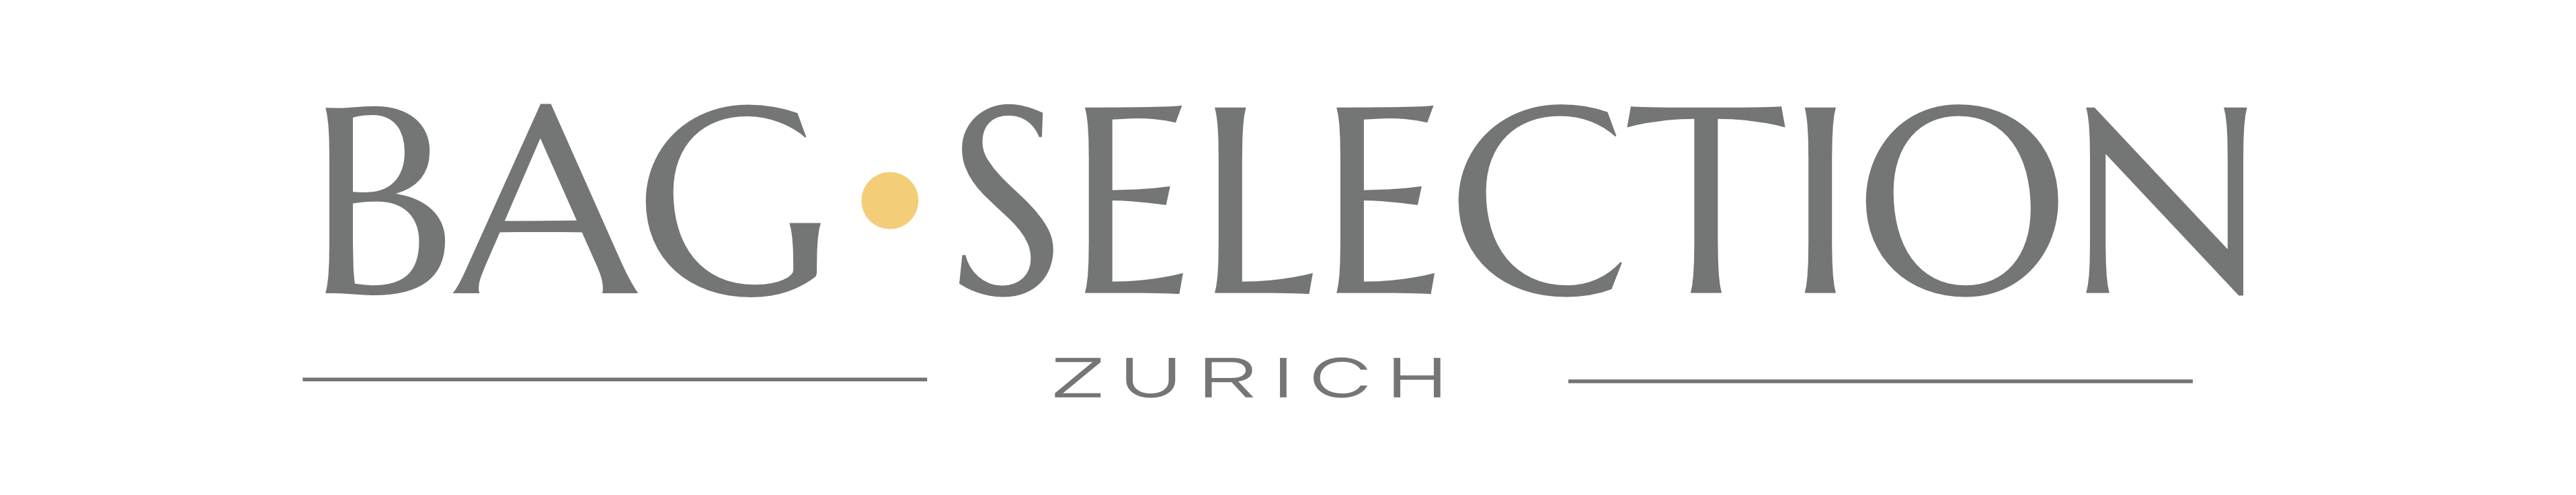 Bag Selection Zurich